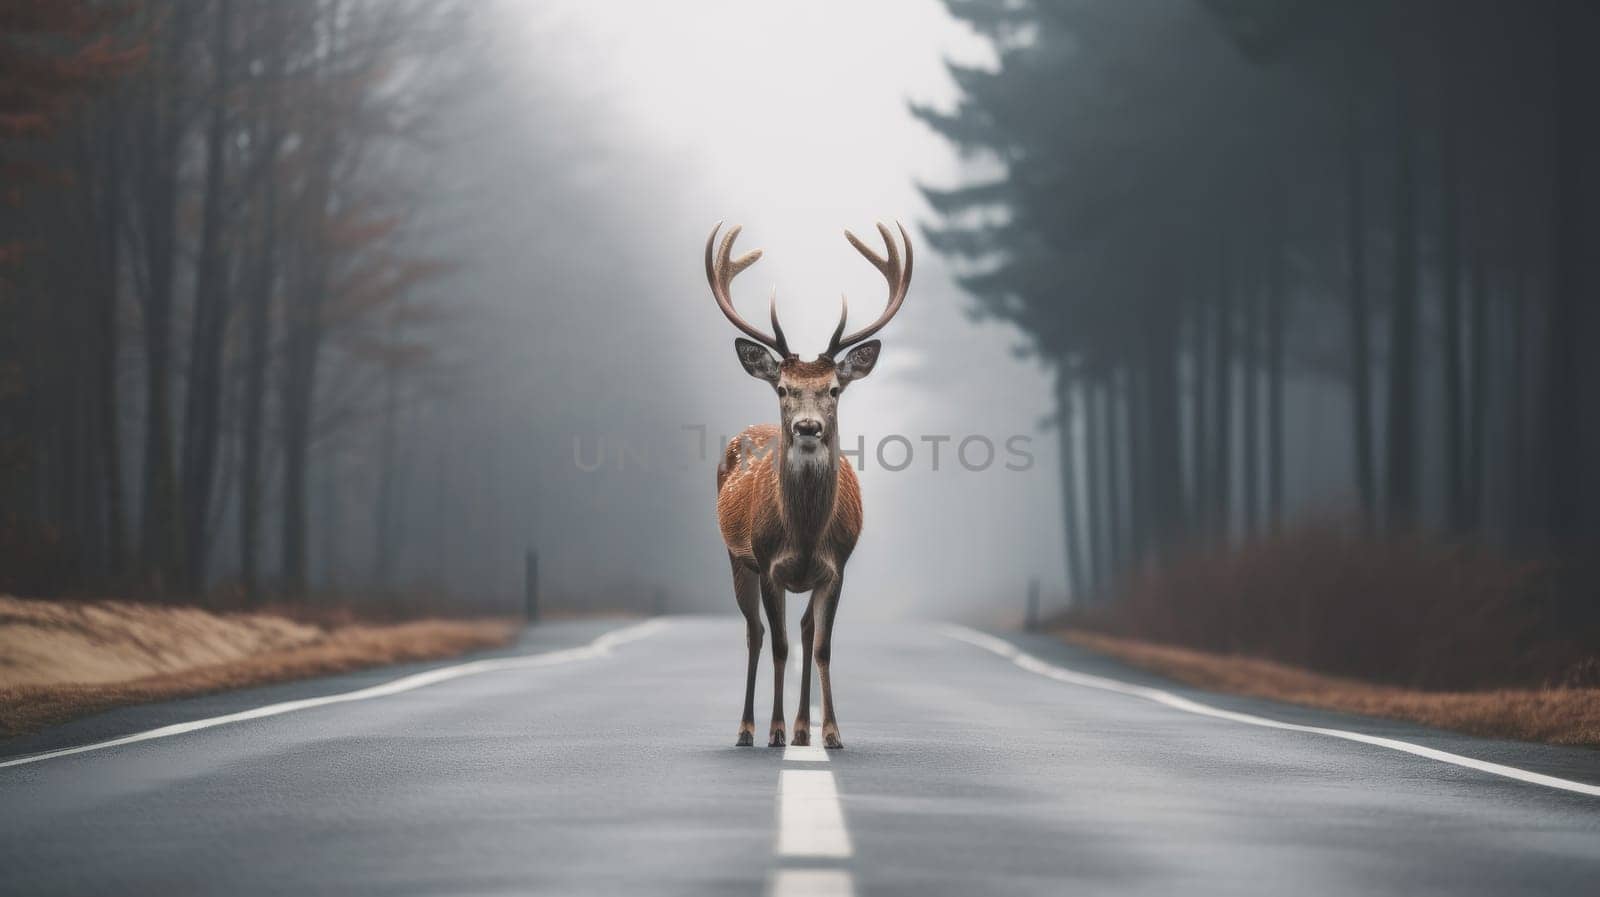 Wildlife Caution. Deer Crossing on Misty Forest Road, Transport Hazard Alert, Road Safety Awareness in Foggy Morning Setting by ViShark